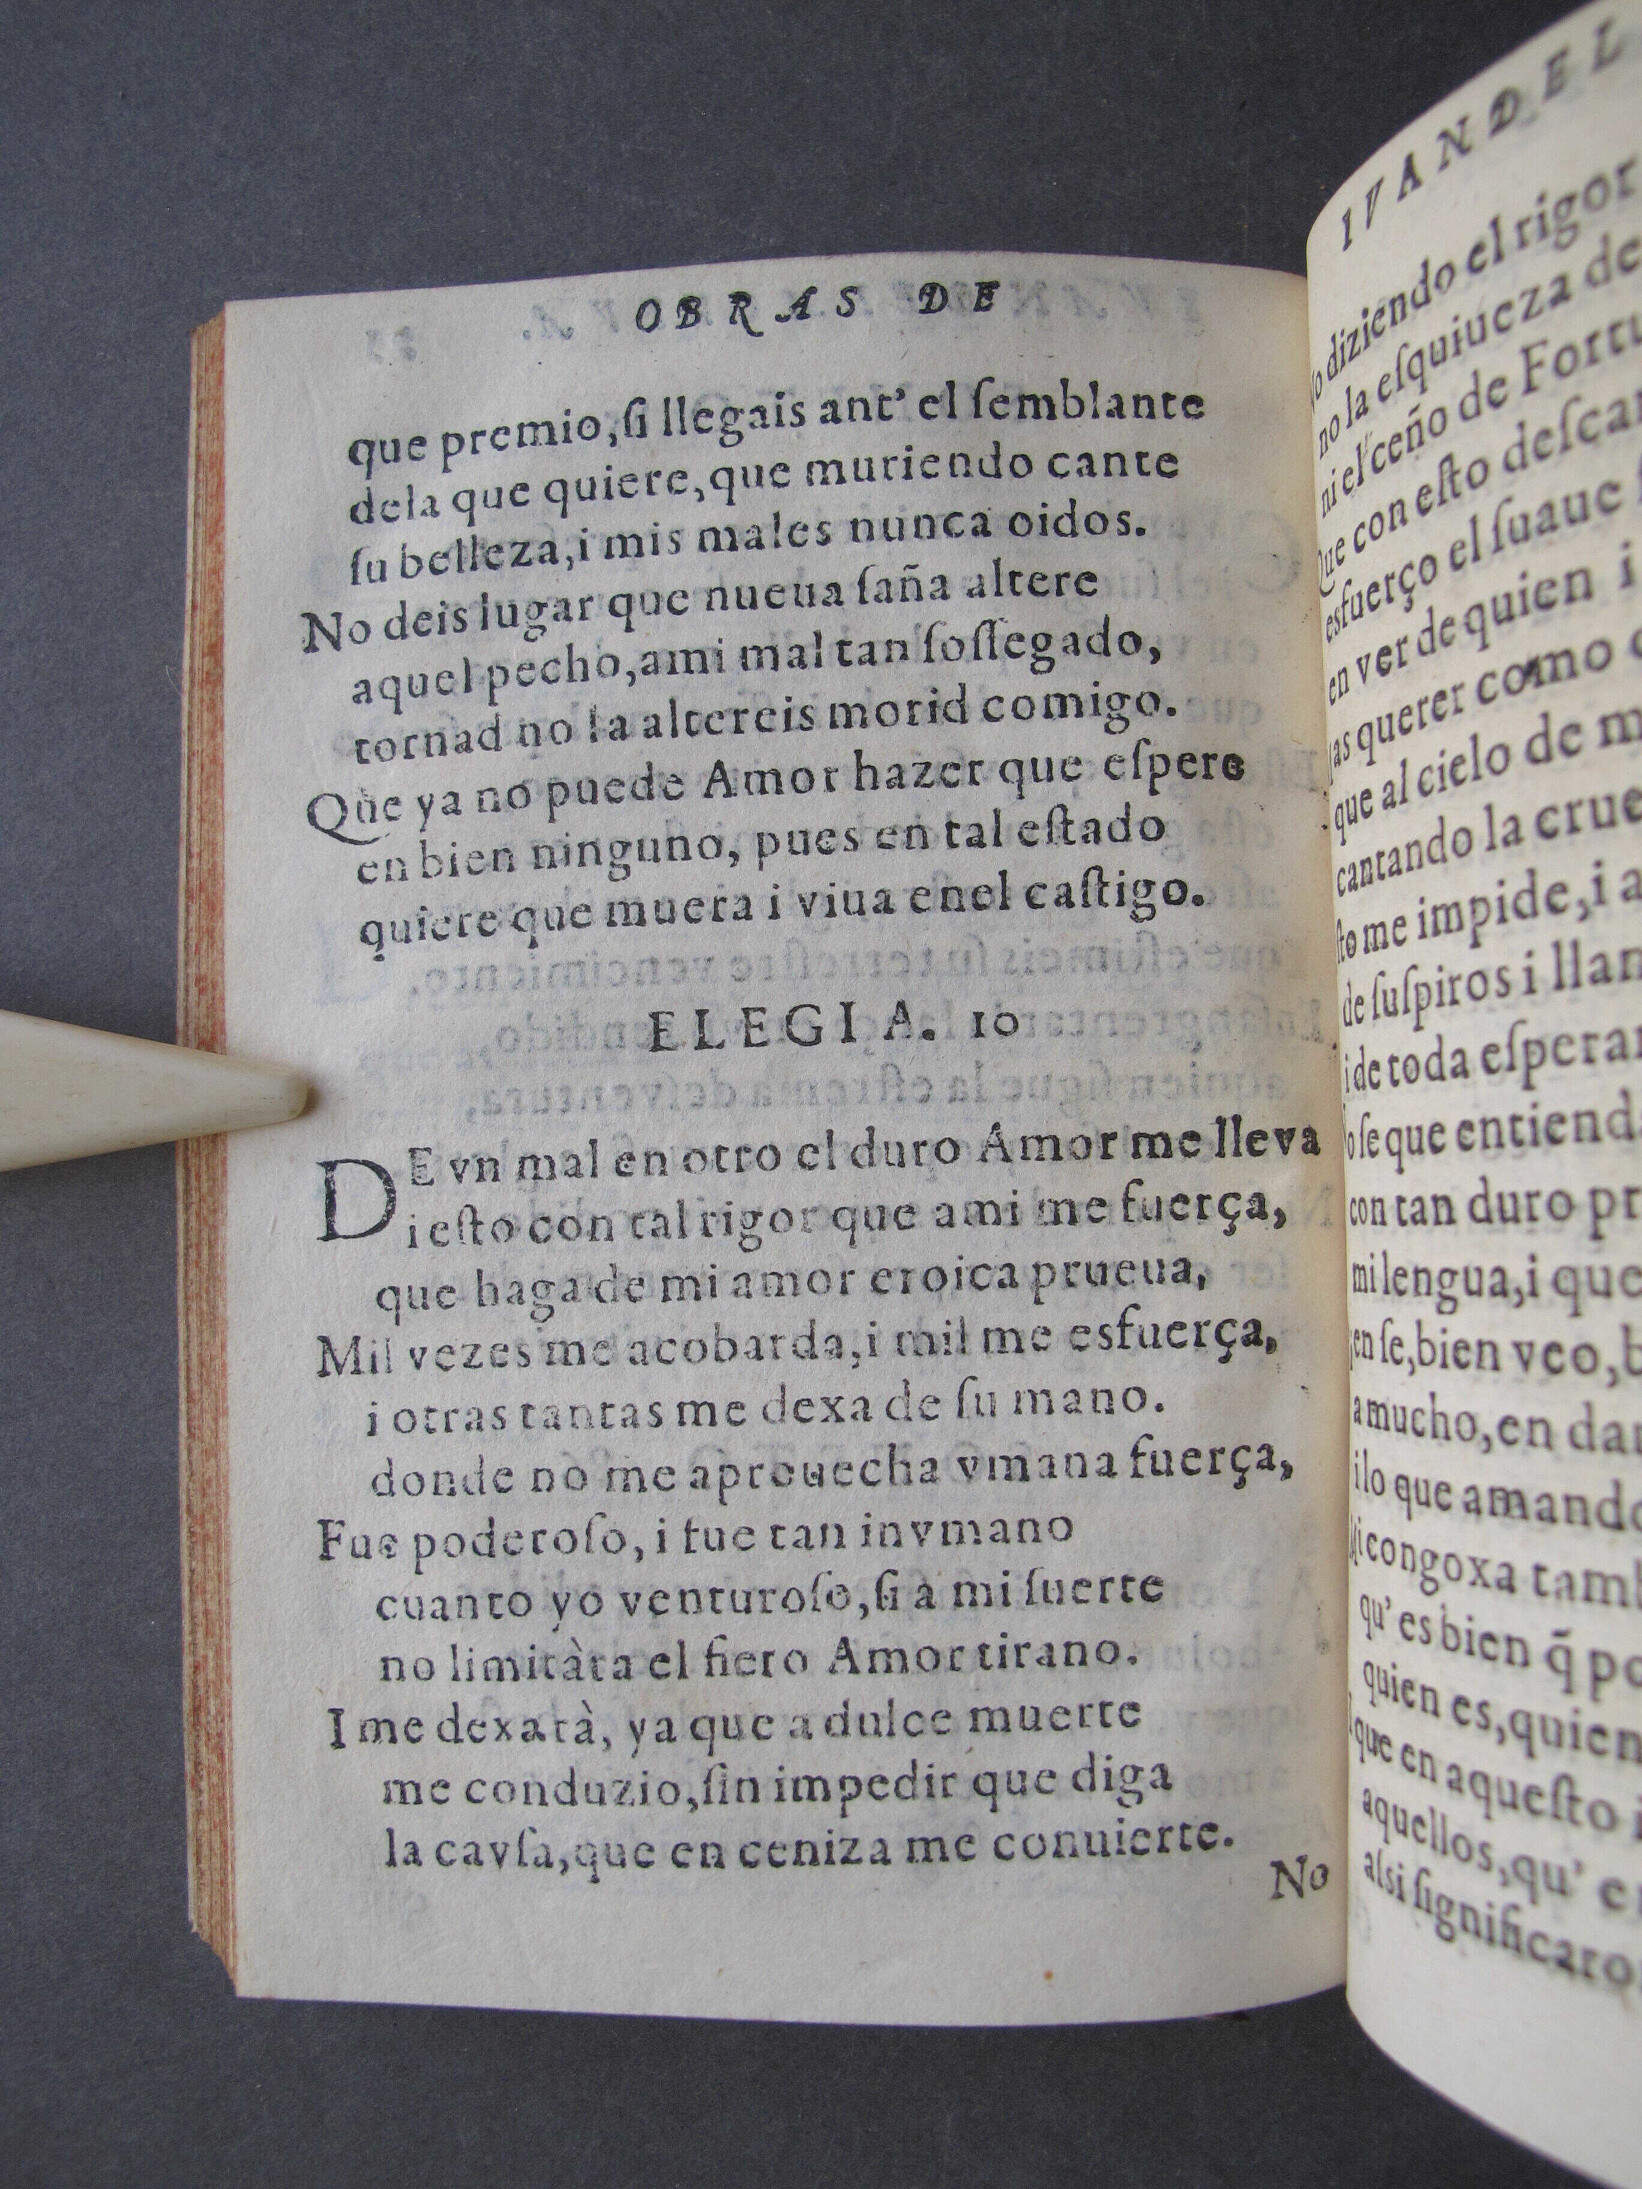 Folio I8 verso